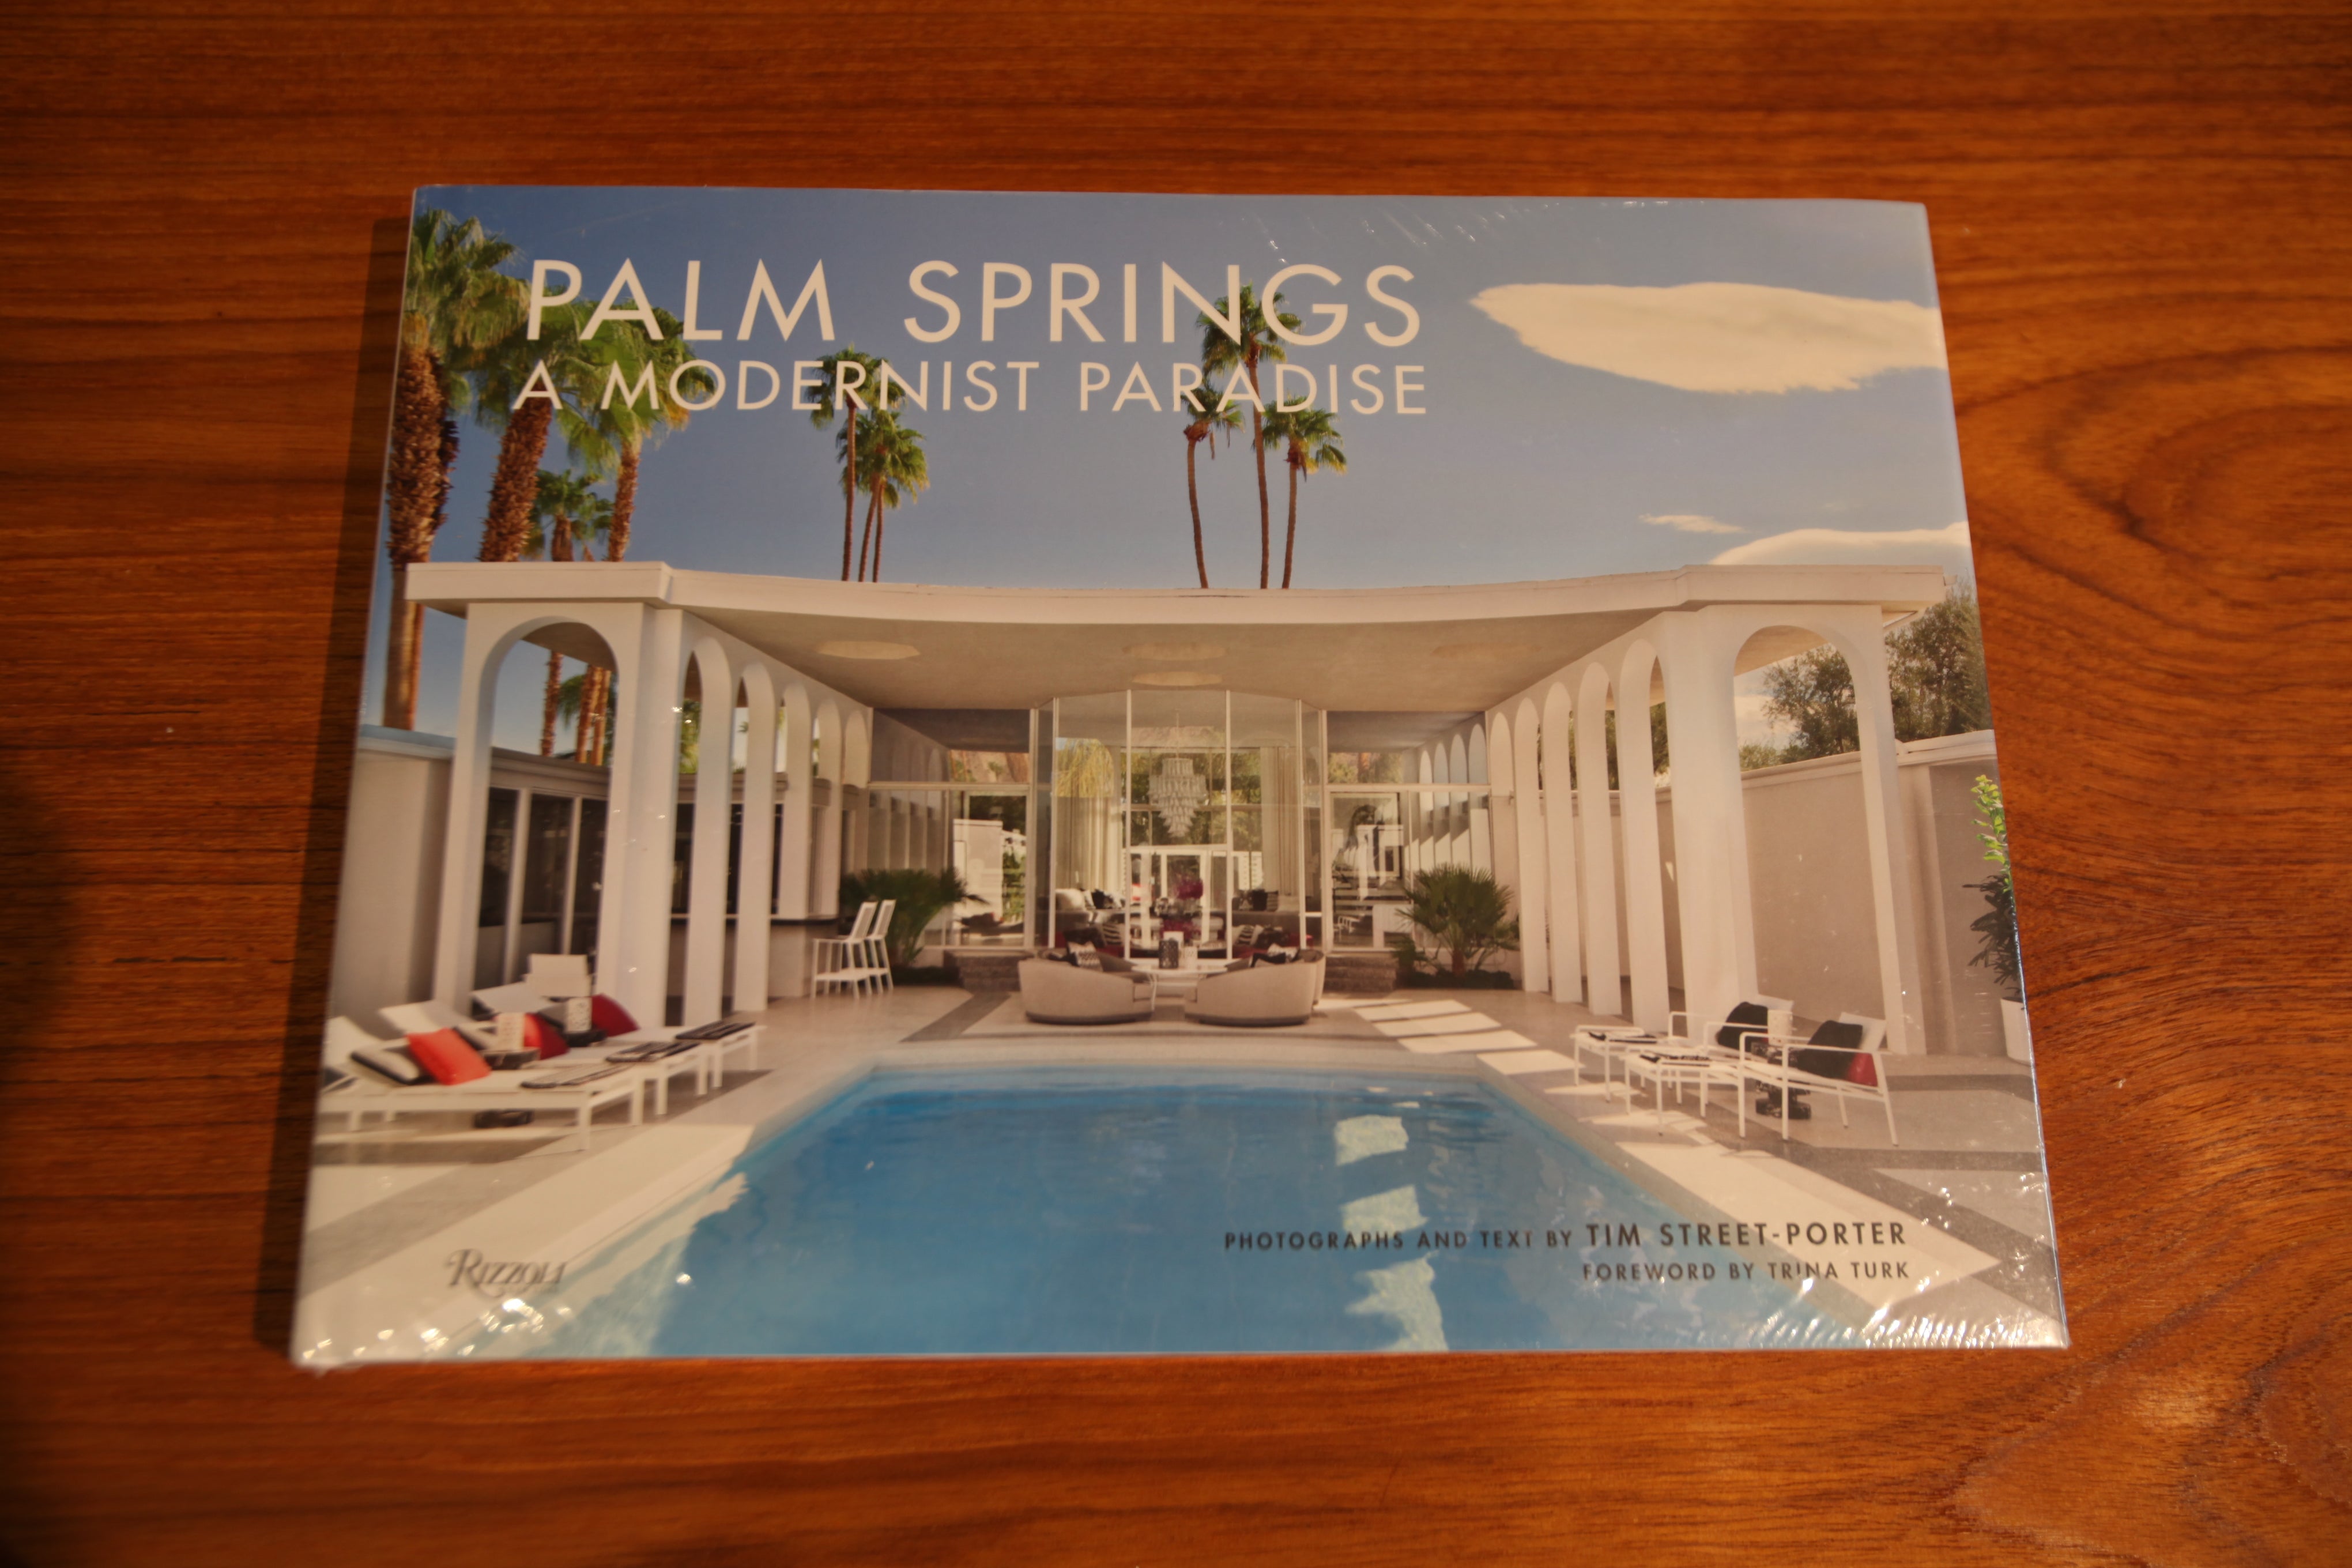 PALM SPRINGS "A Modernist Paradise" BOOK